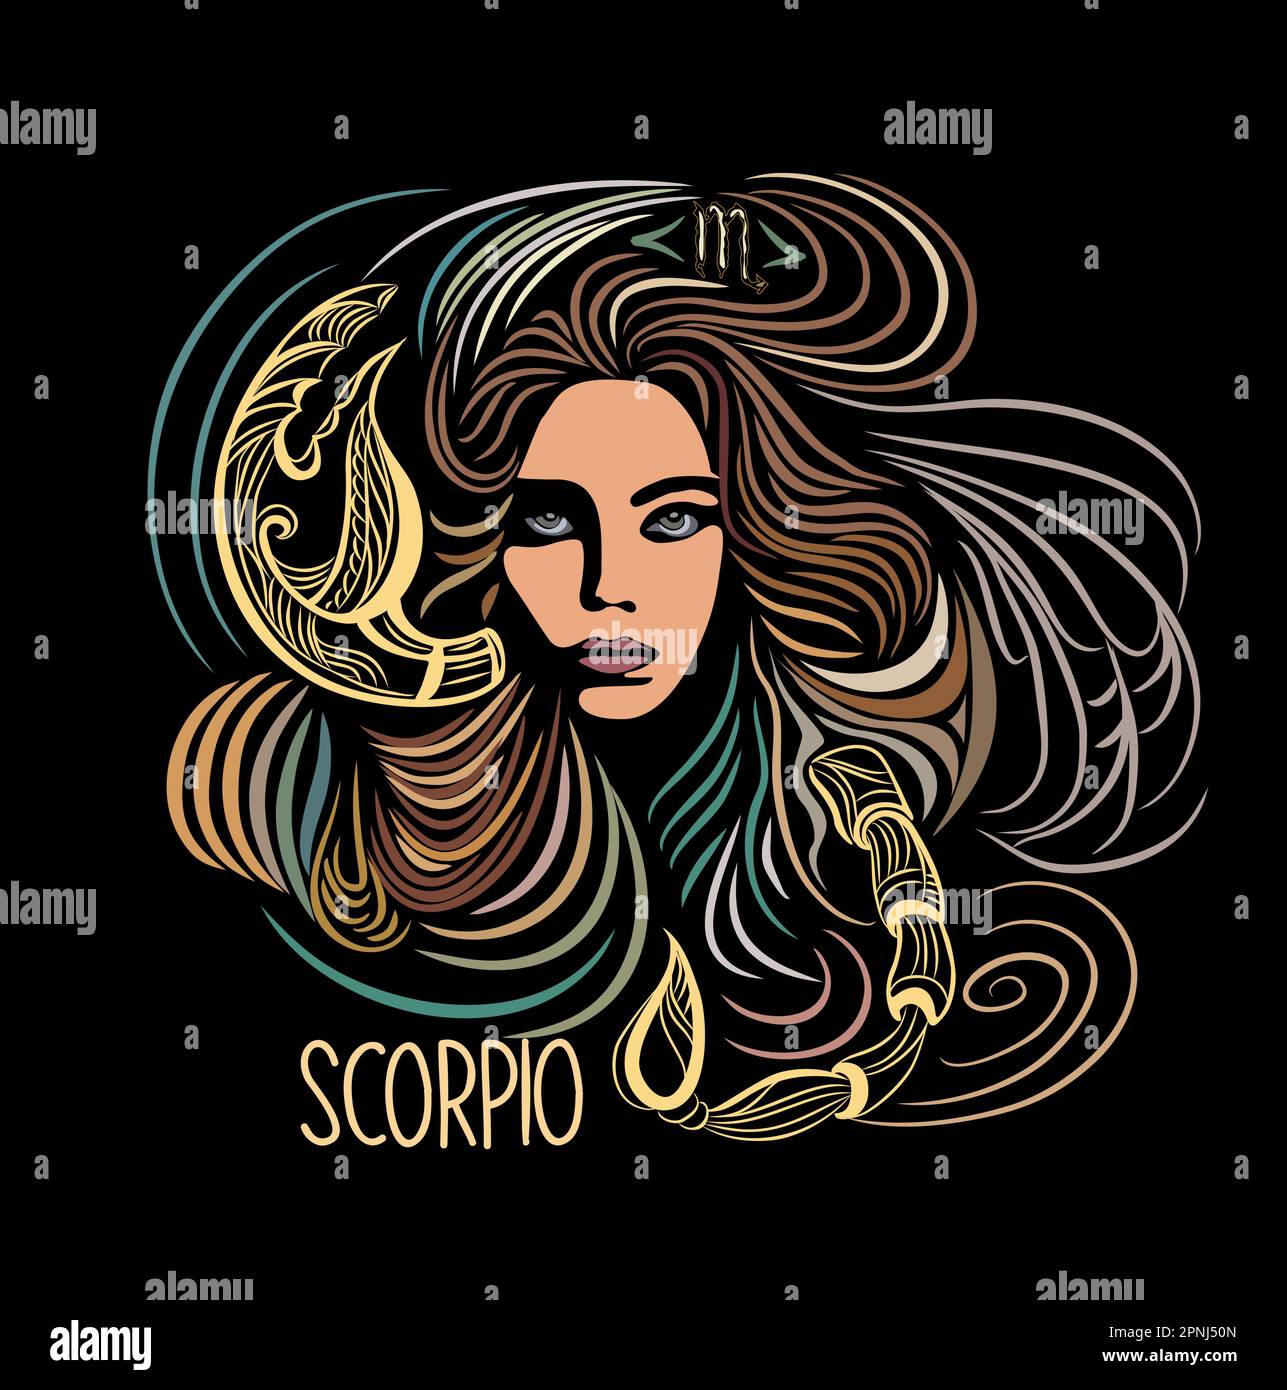 Scorpio Zodiac sign beautiful girl vector art. Stock Vector